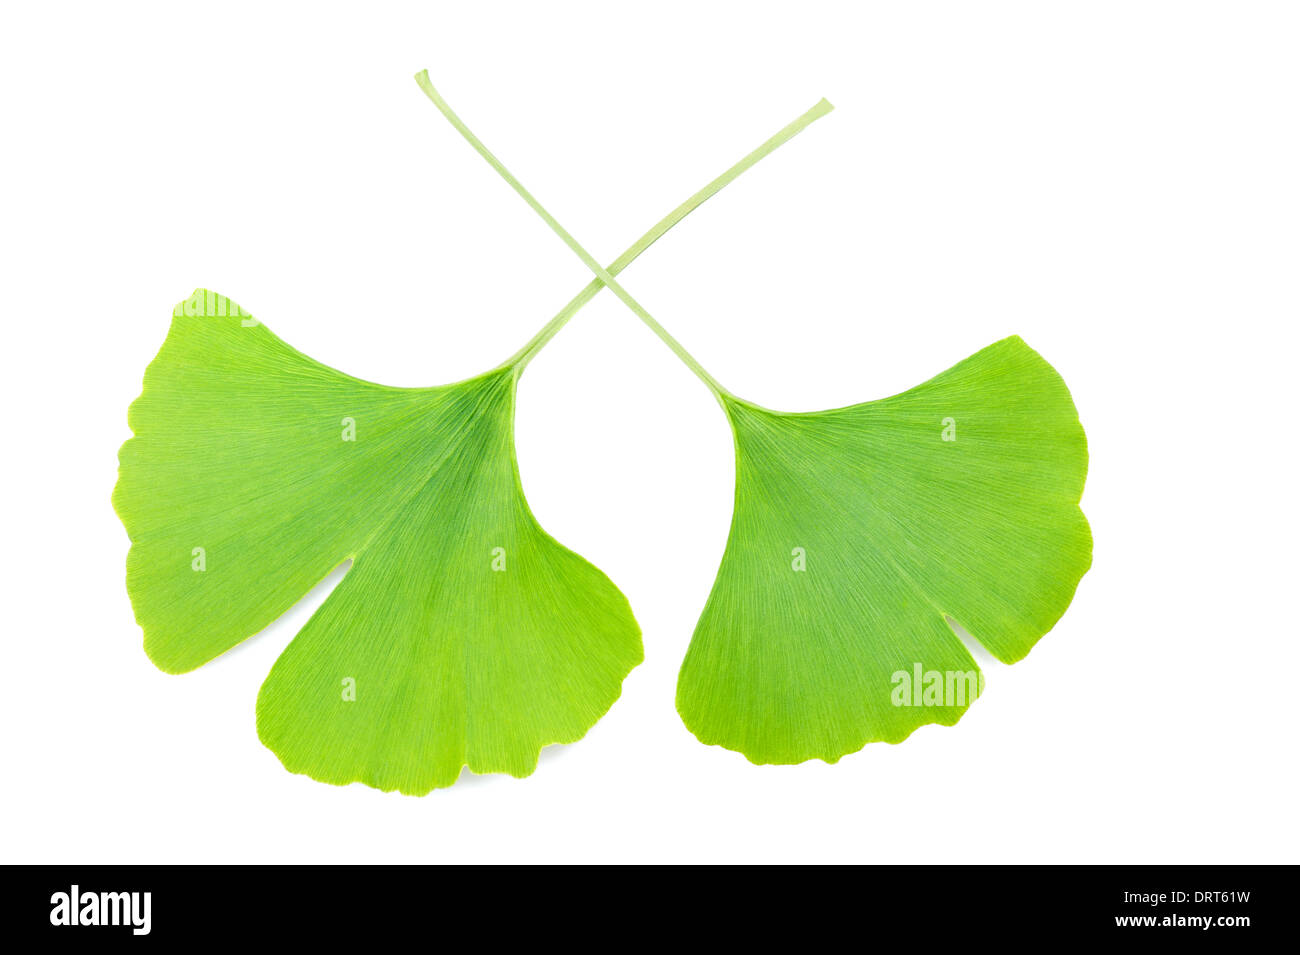 two ginkgo biloba leaves on white background Stock Photo